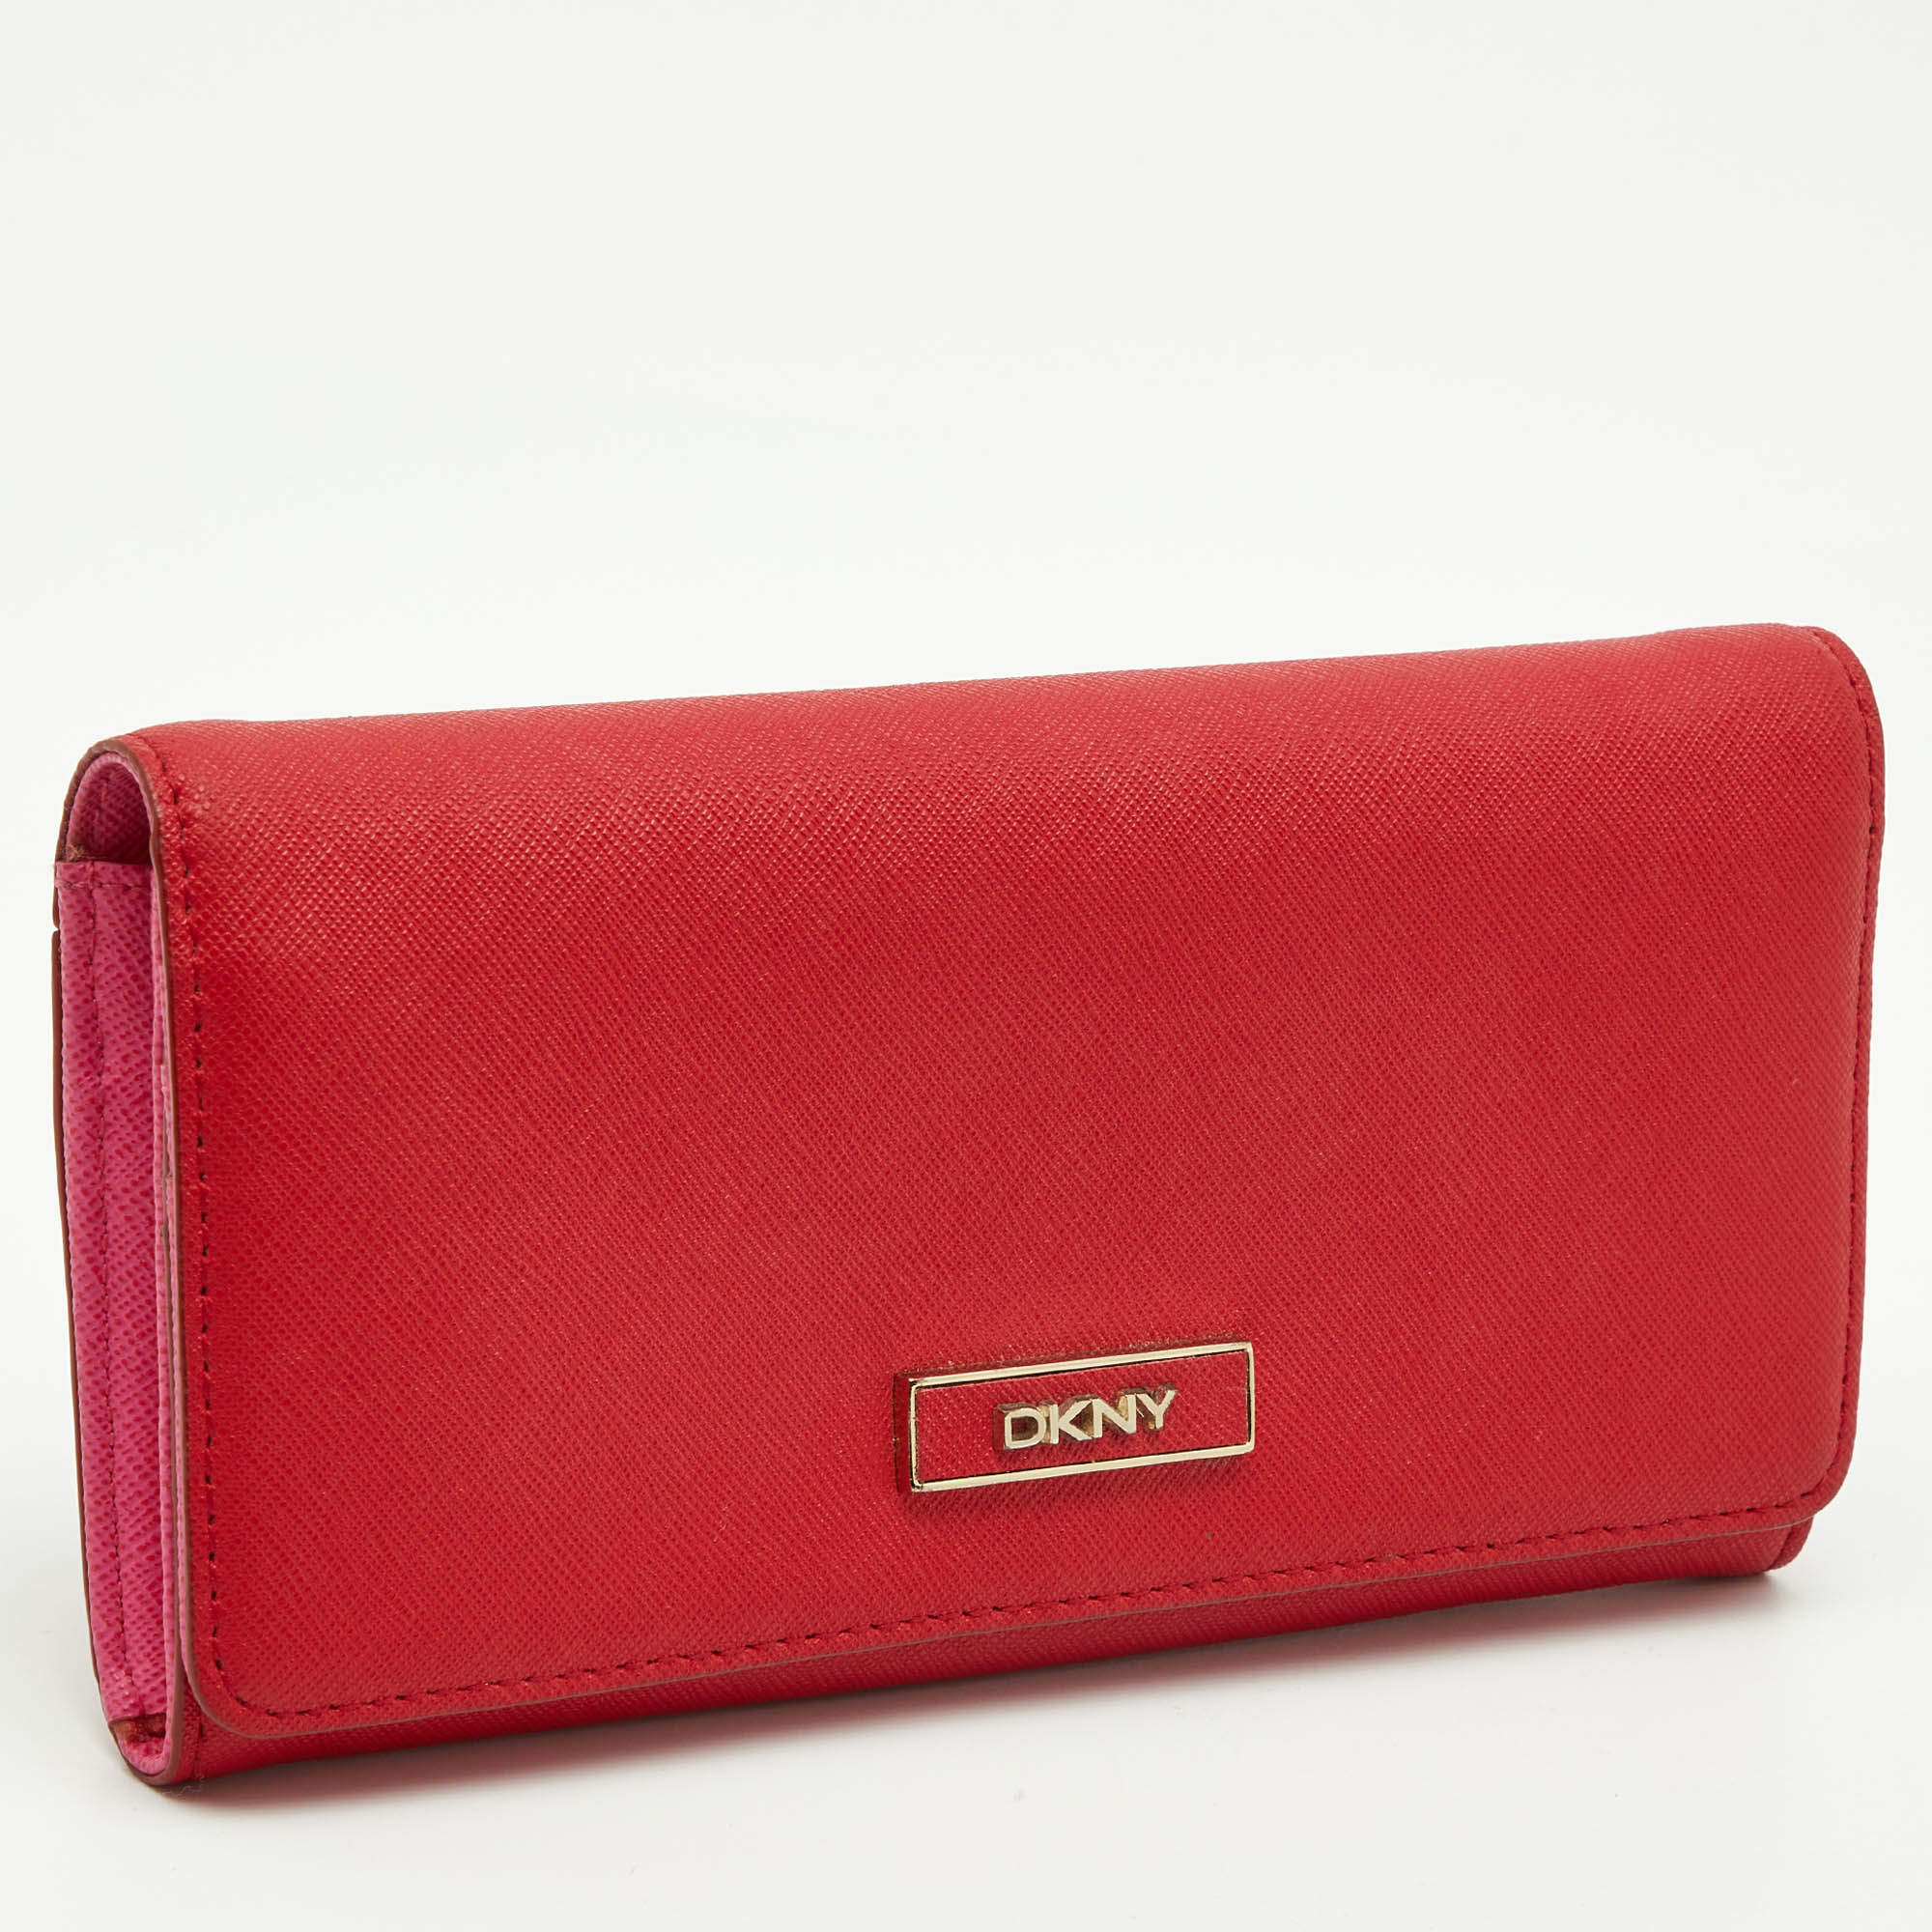 Dkny Wallet Velita Small Zip Around New With Tags | eBay